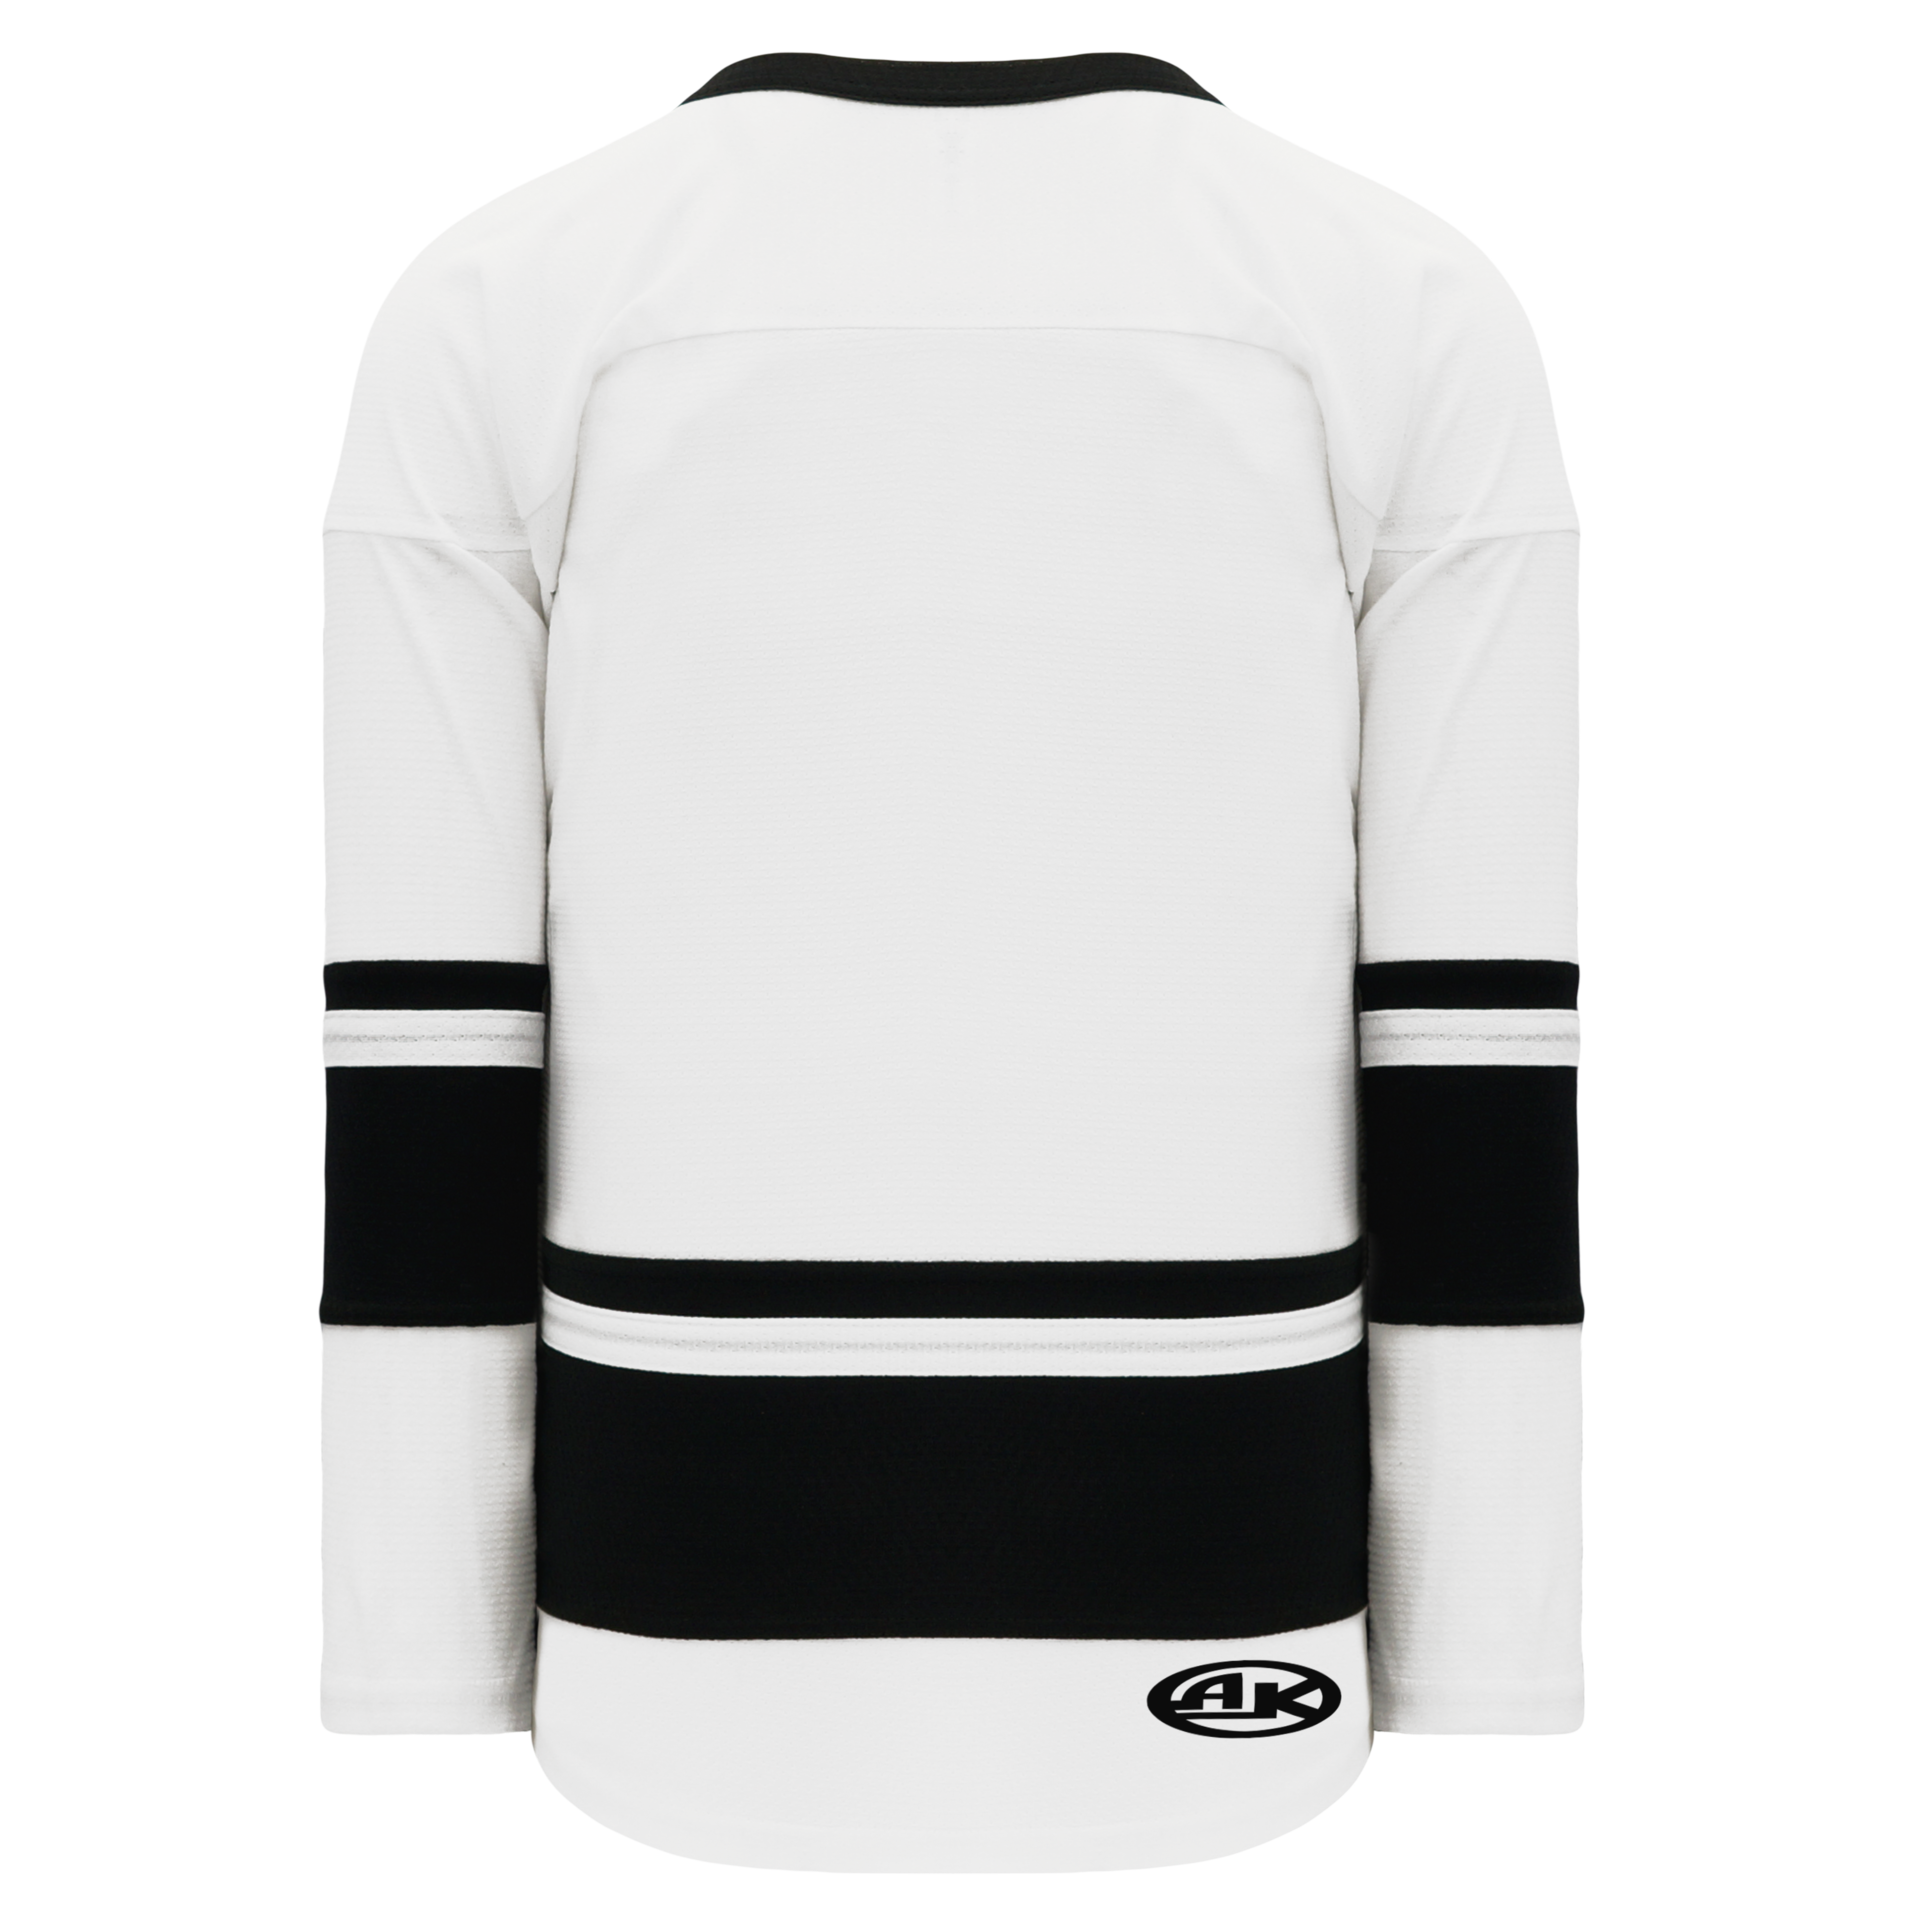 Custom Sublimated Hockey Jerseys, Pant Shells and Socks by AK Athletic Knit  - Hockey Jerseys Direct